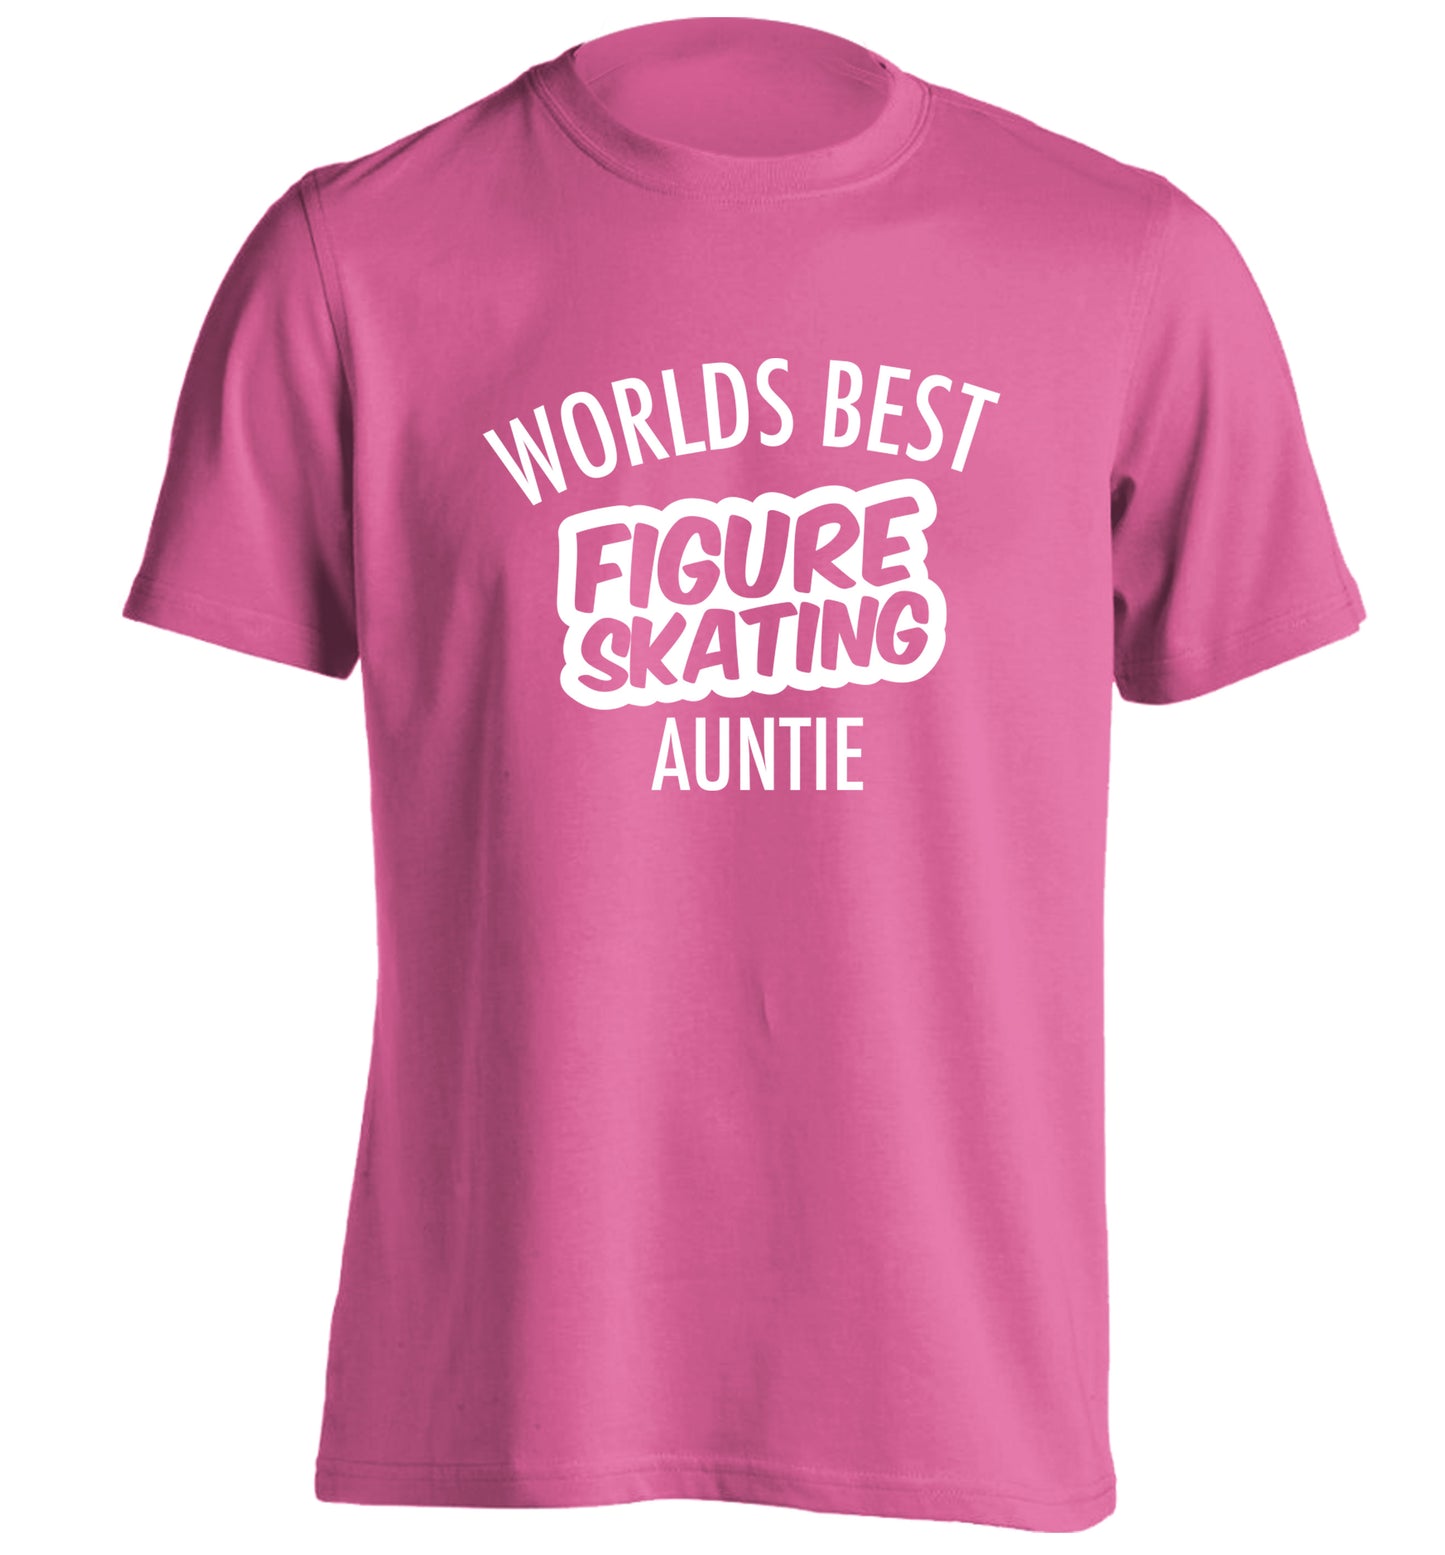 Worlds best figure skating auntie adults unisexpink Tshirt 2XL